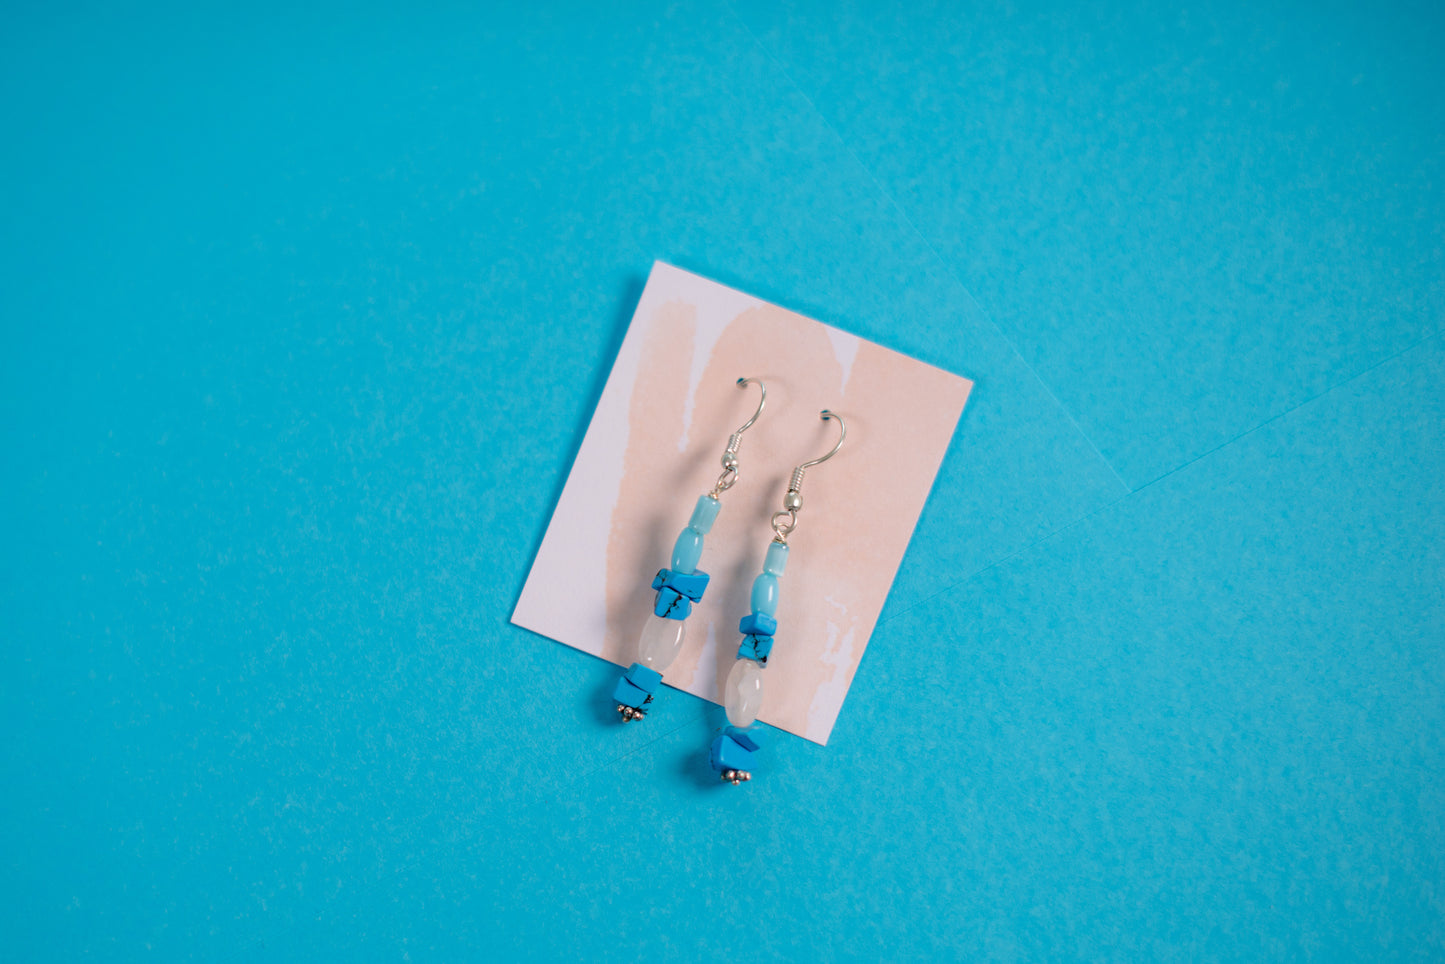 Blue & White Necklace/Bracelet/Earring Set